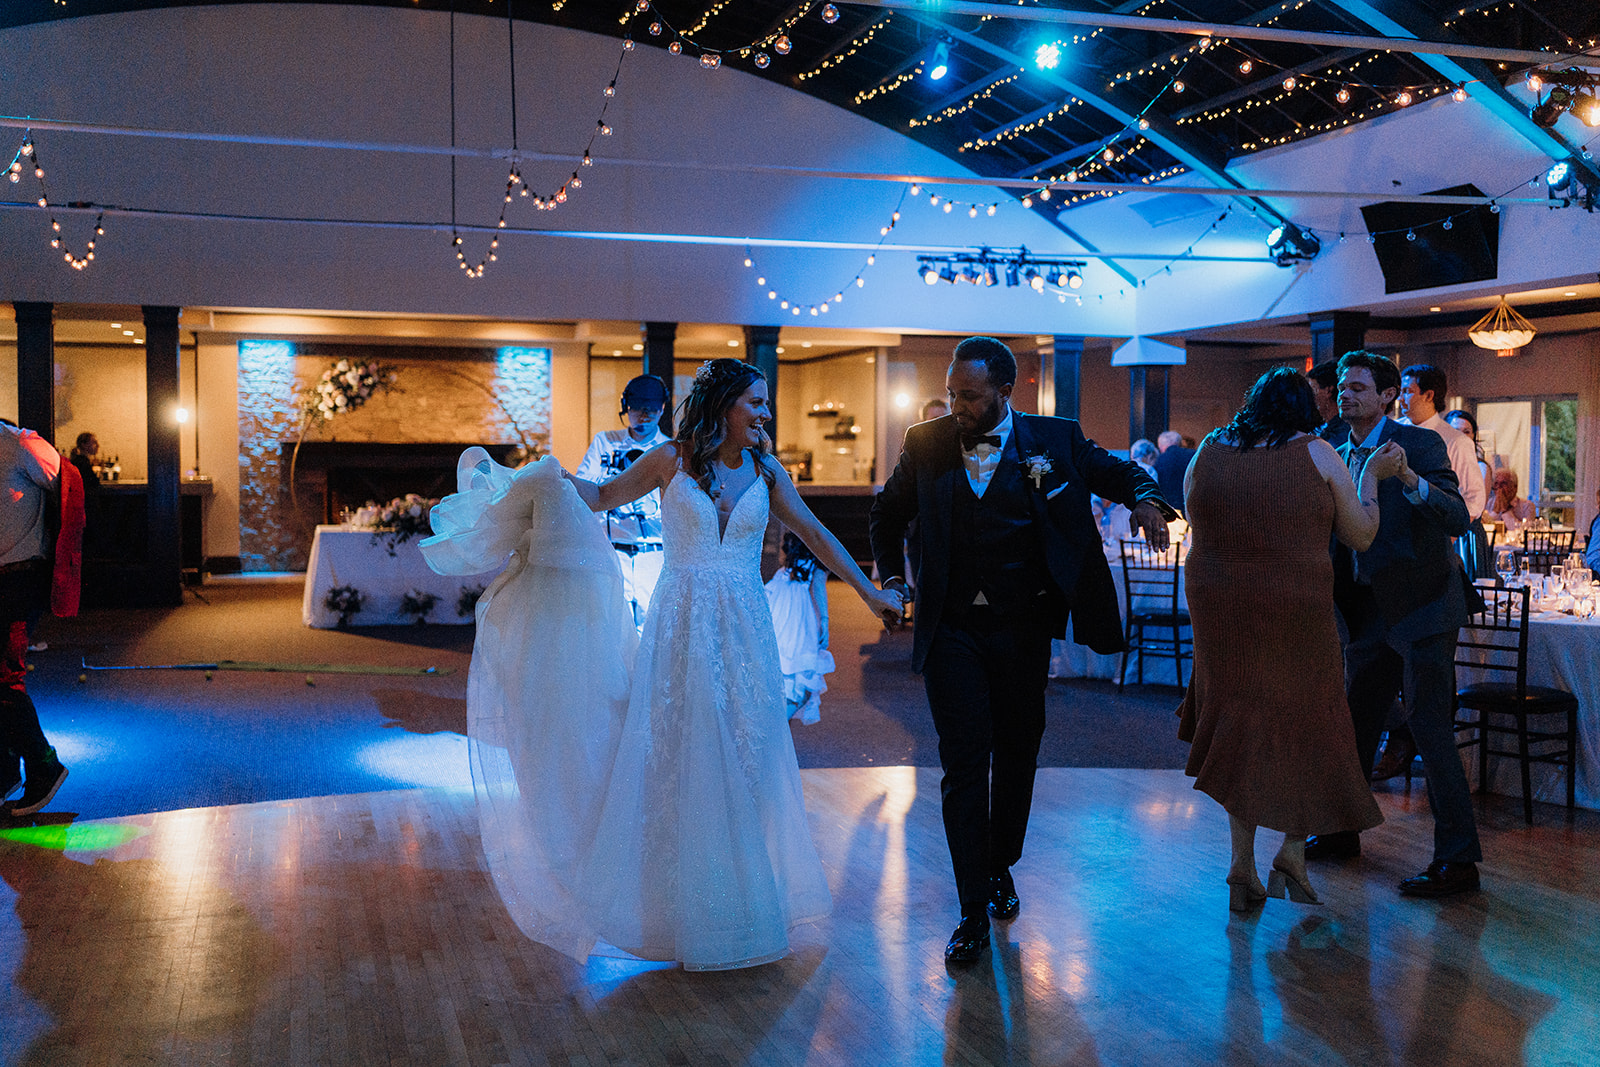 Husband and wife walking onto the dance floor.